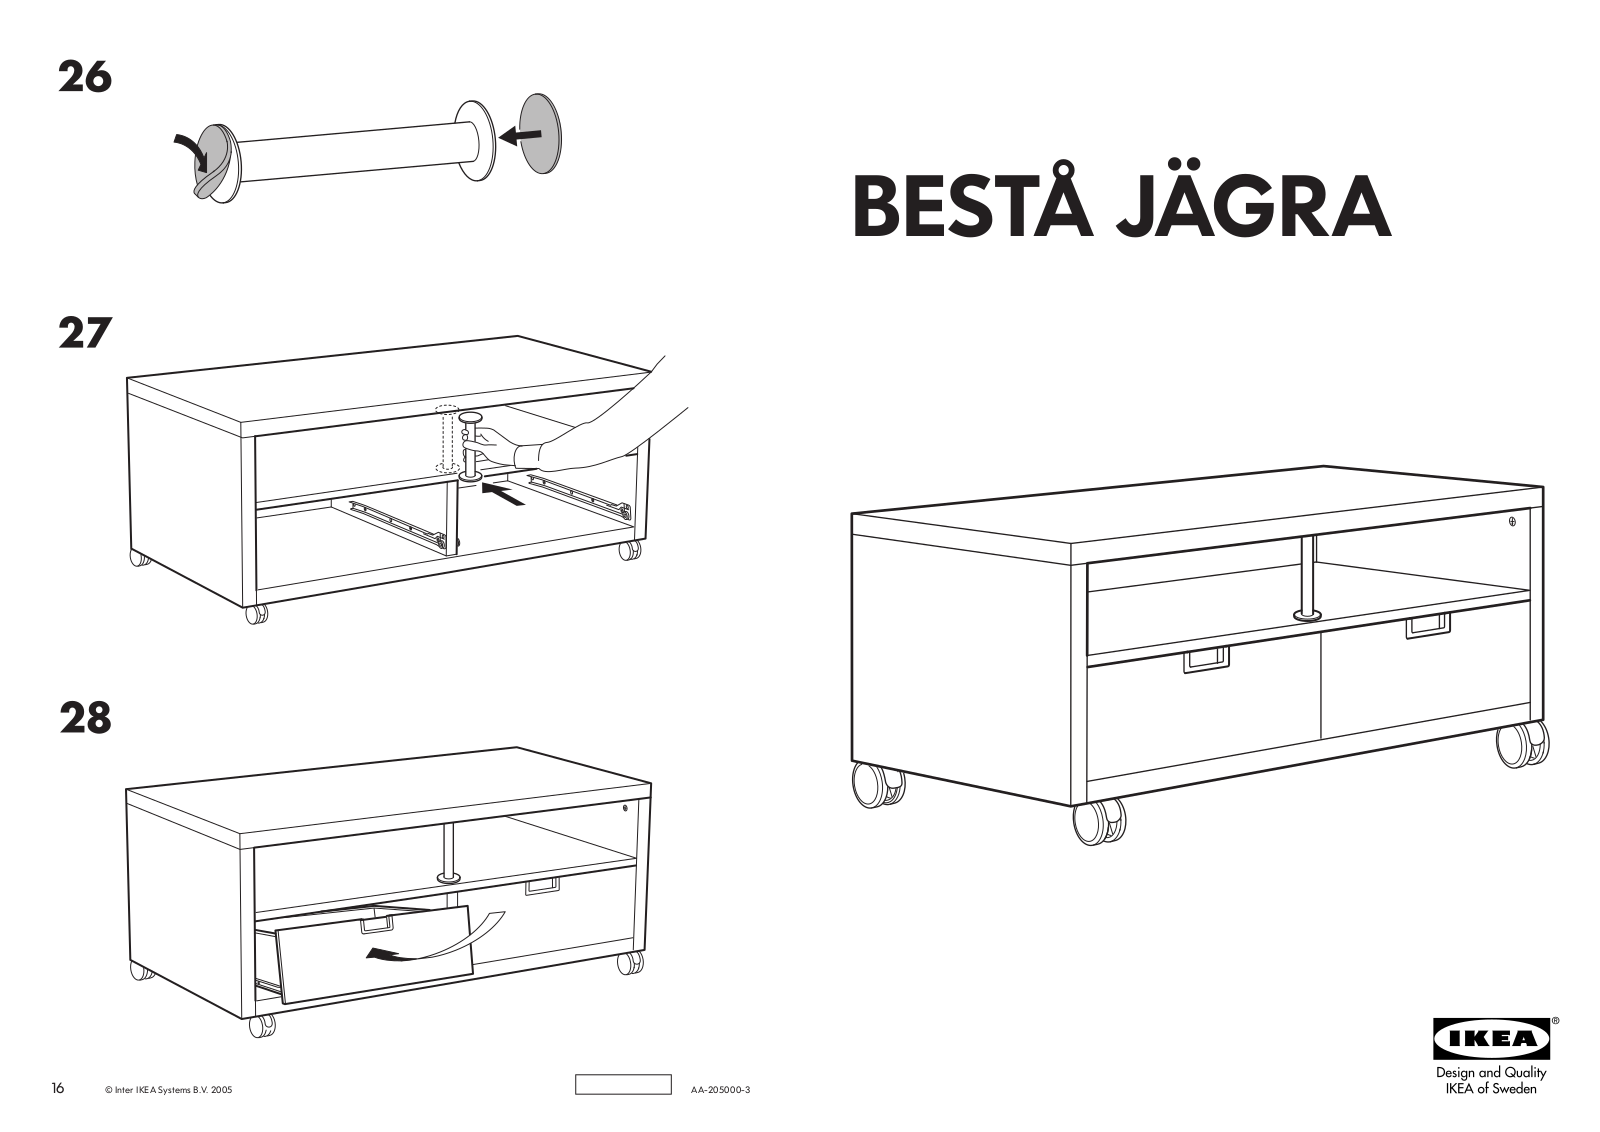 IKEA BESTA JAGRA User Manual